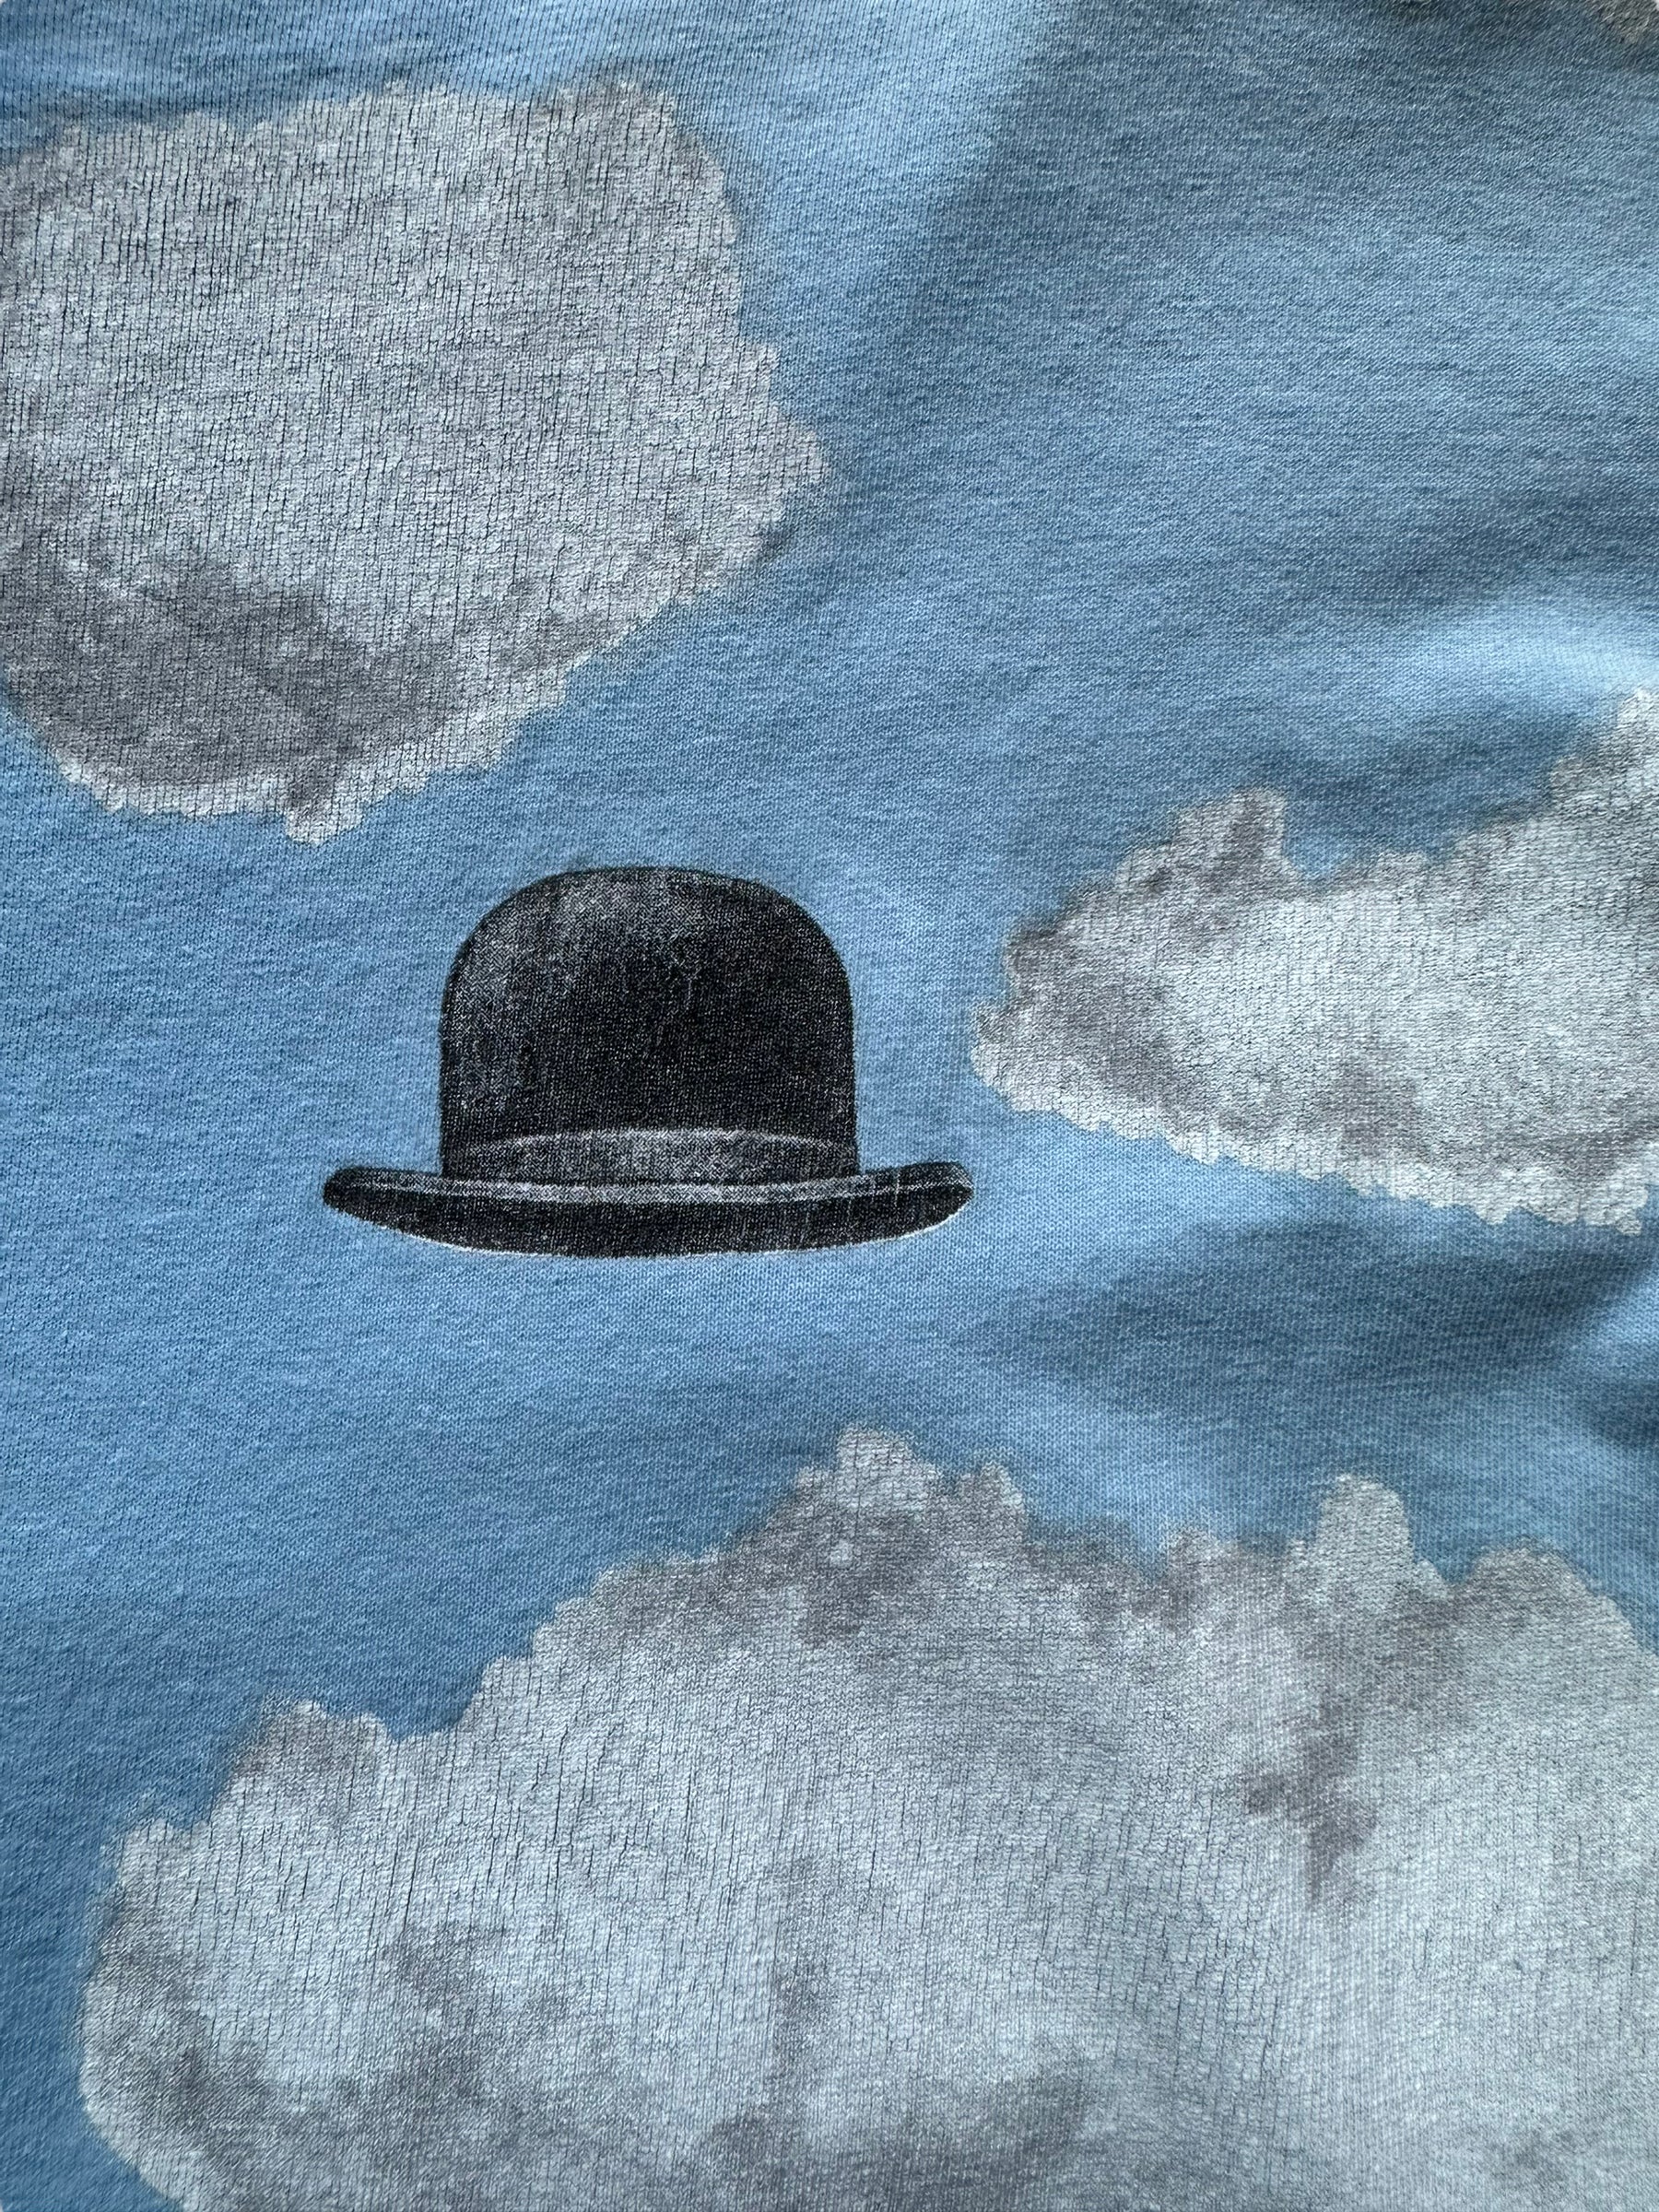 Hat of Vintage René Magritte AOP Tee SZ XL |  Vintage Art Tee Seattle | Barn Owl Vintage